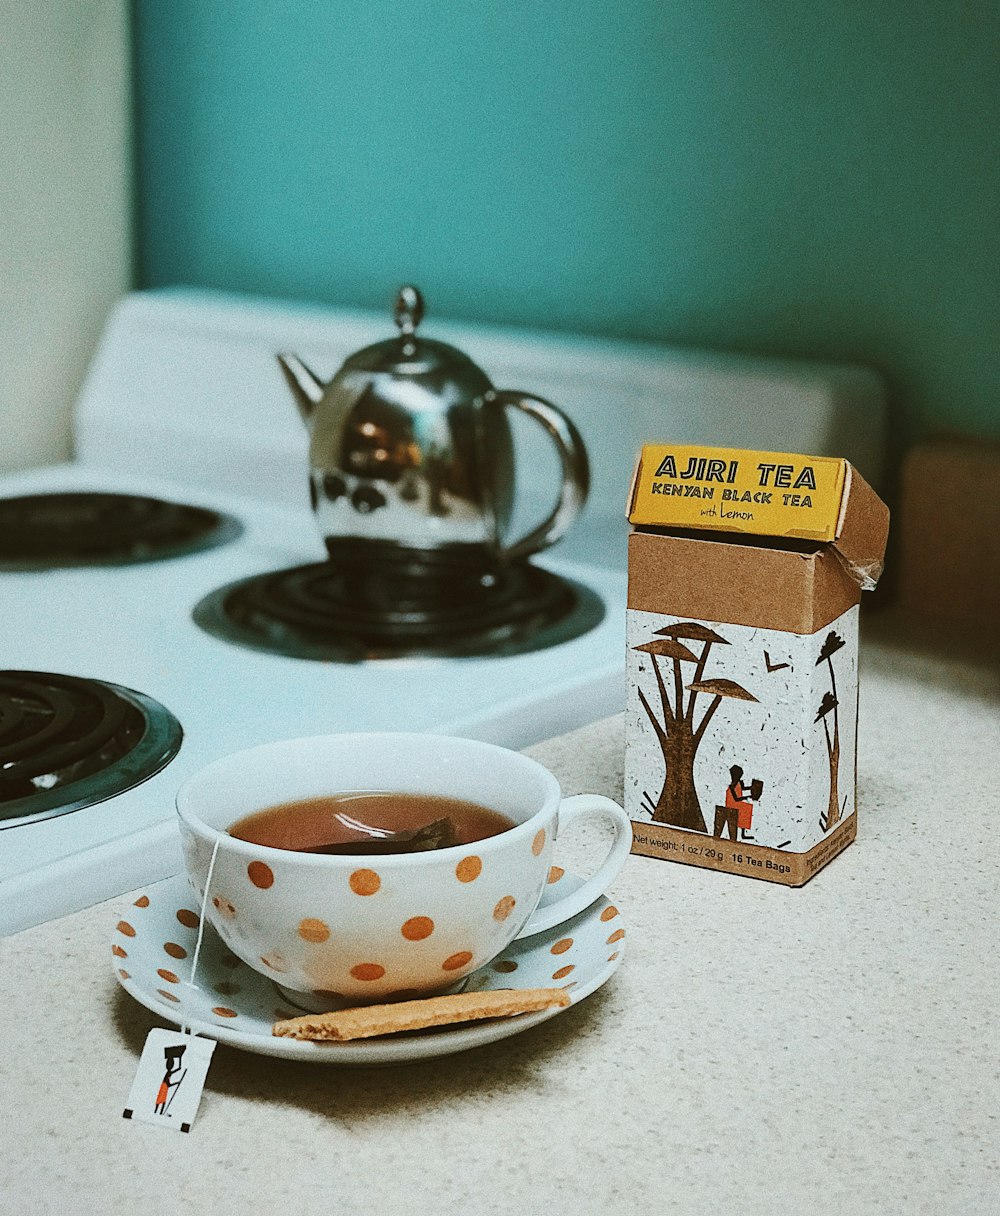 white and brown polka-dot ceramic teacup